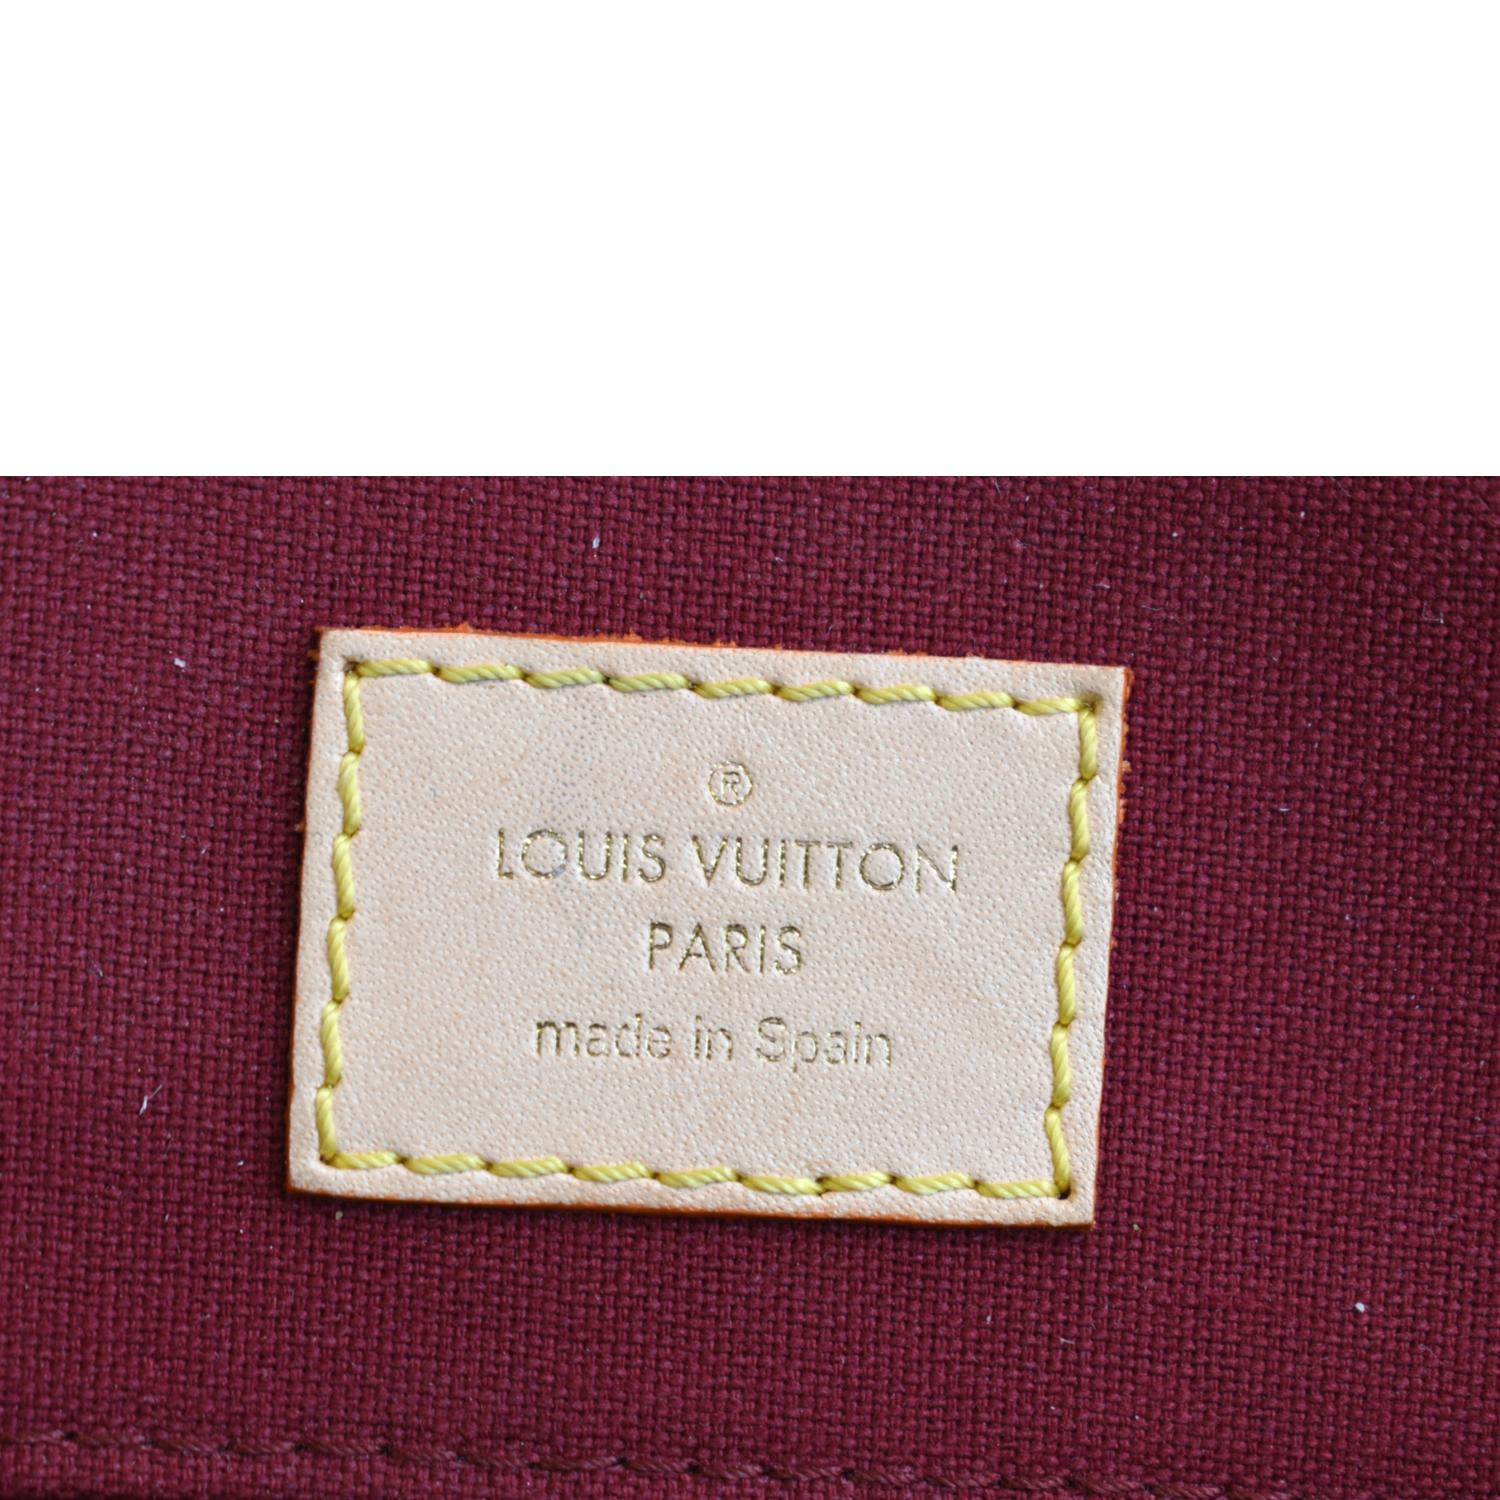 Louis Vuitton - Grand Palais - Paris